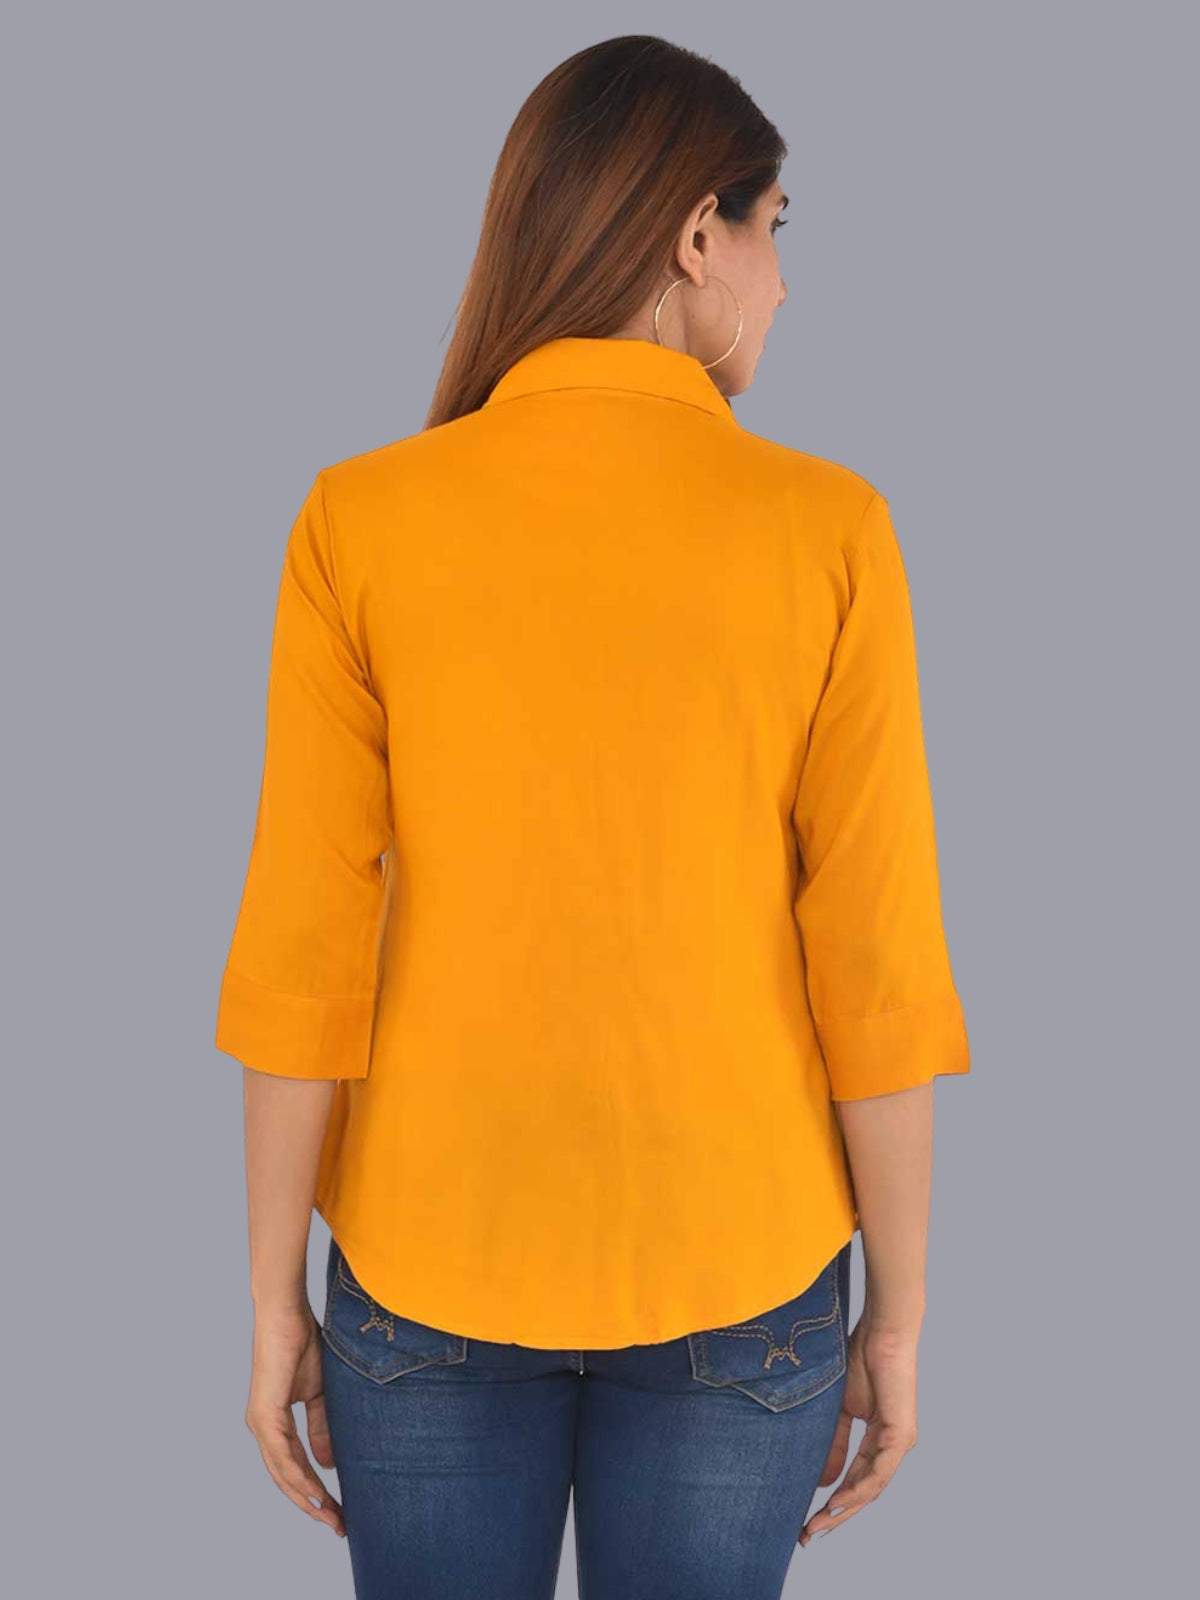 Womens Solid Mustard Regular Fit Spread Collar Rayon Shirt